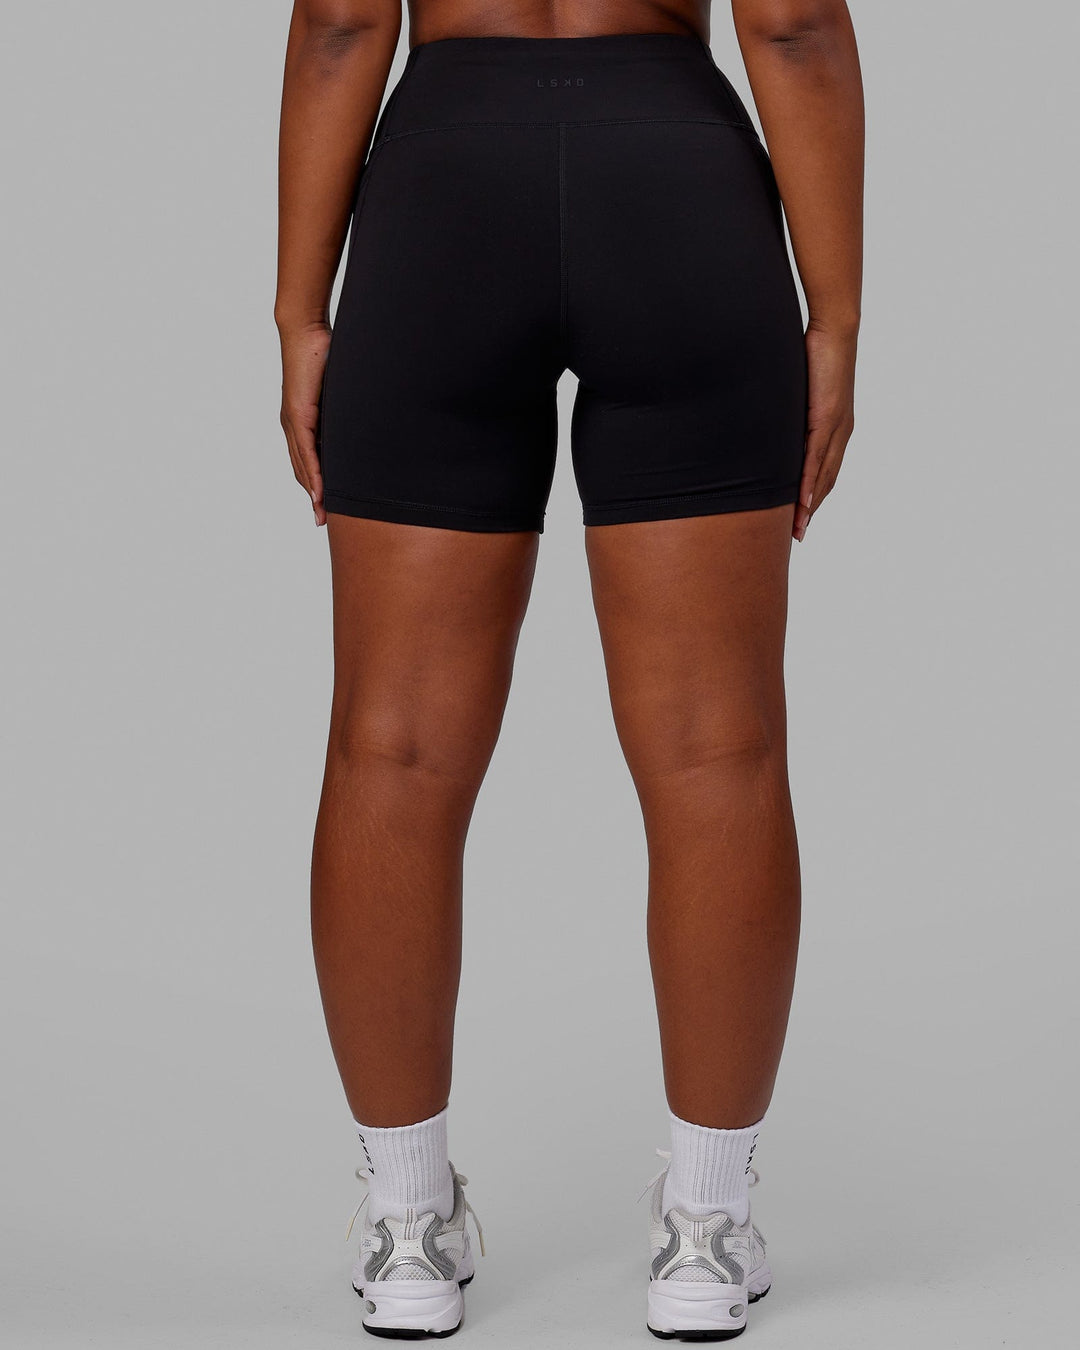 Rep Mid-Length Shorts - Pride-Black